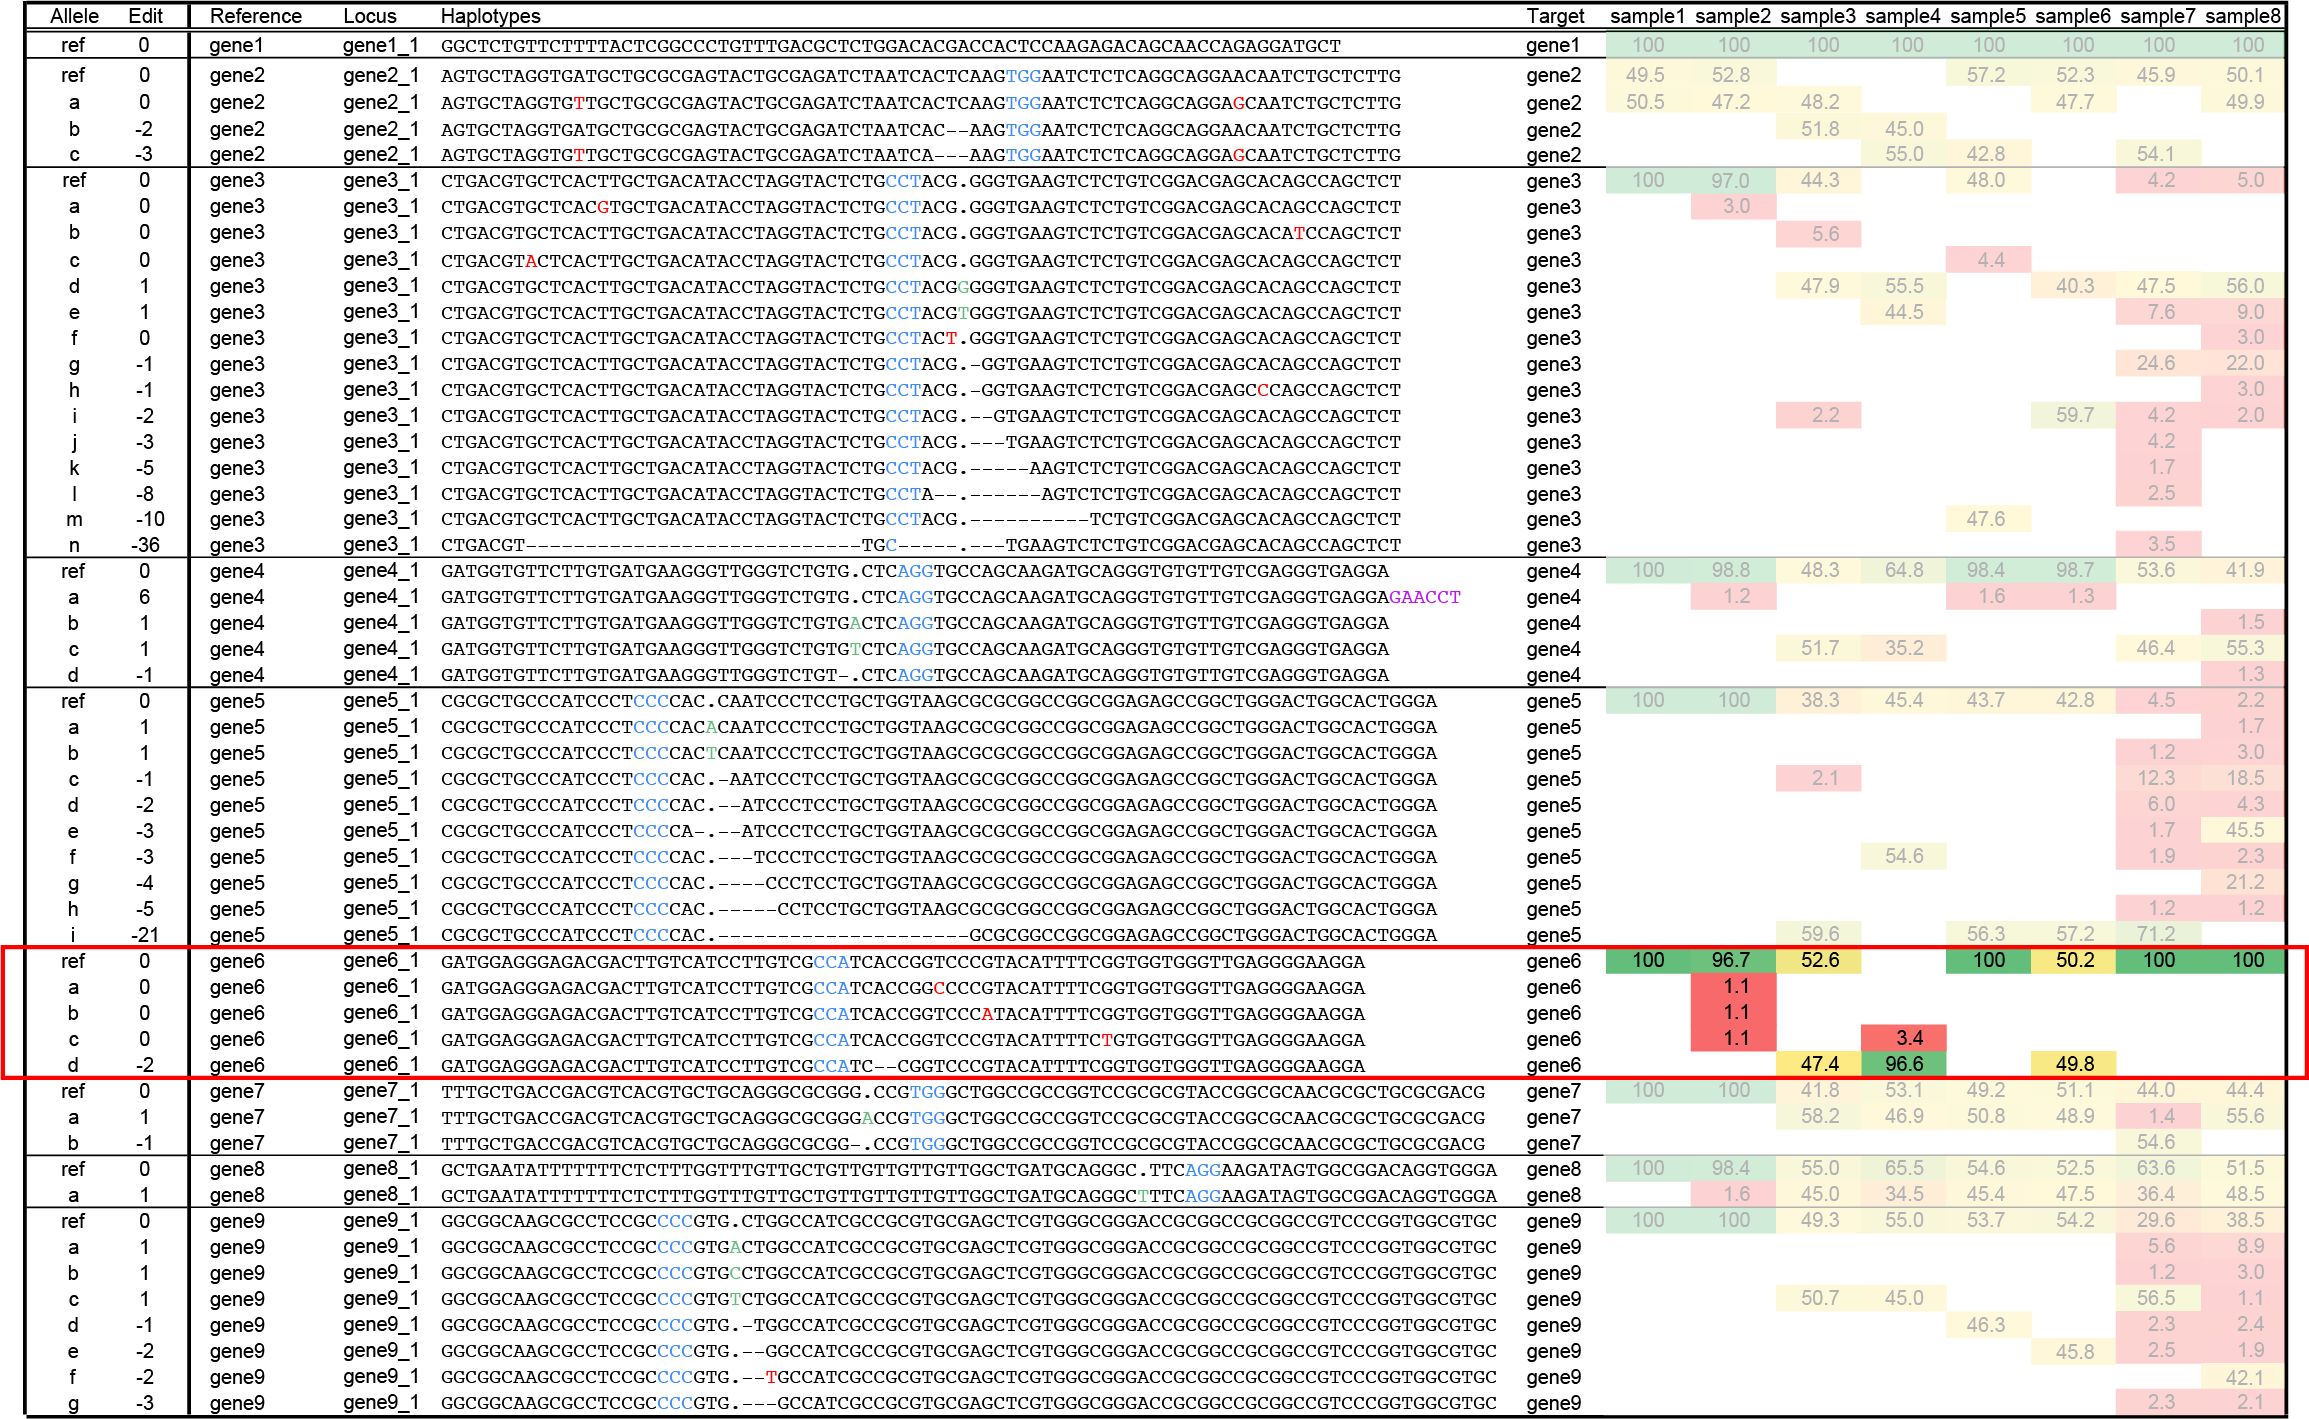 ../_images/Haplotype_window_interpretation_WT_v4_gene6.png